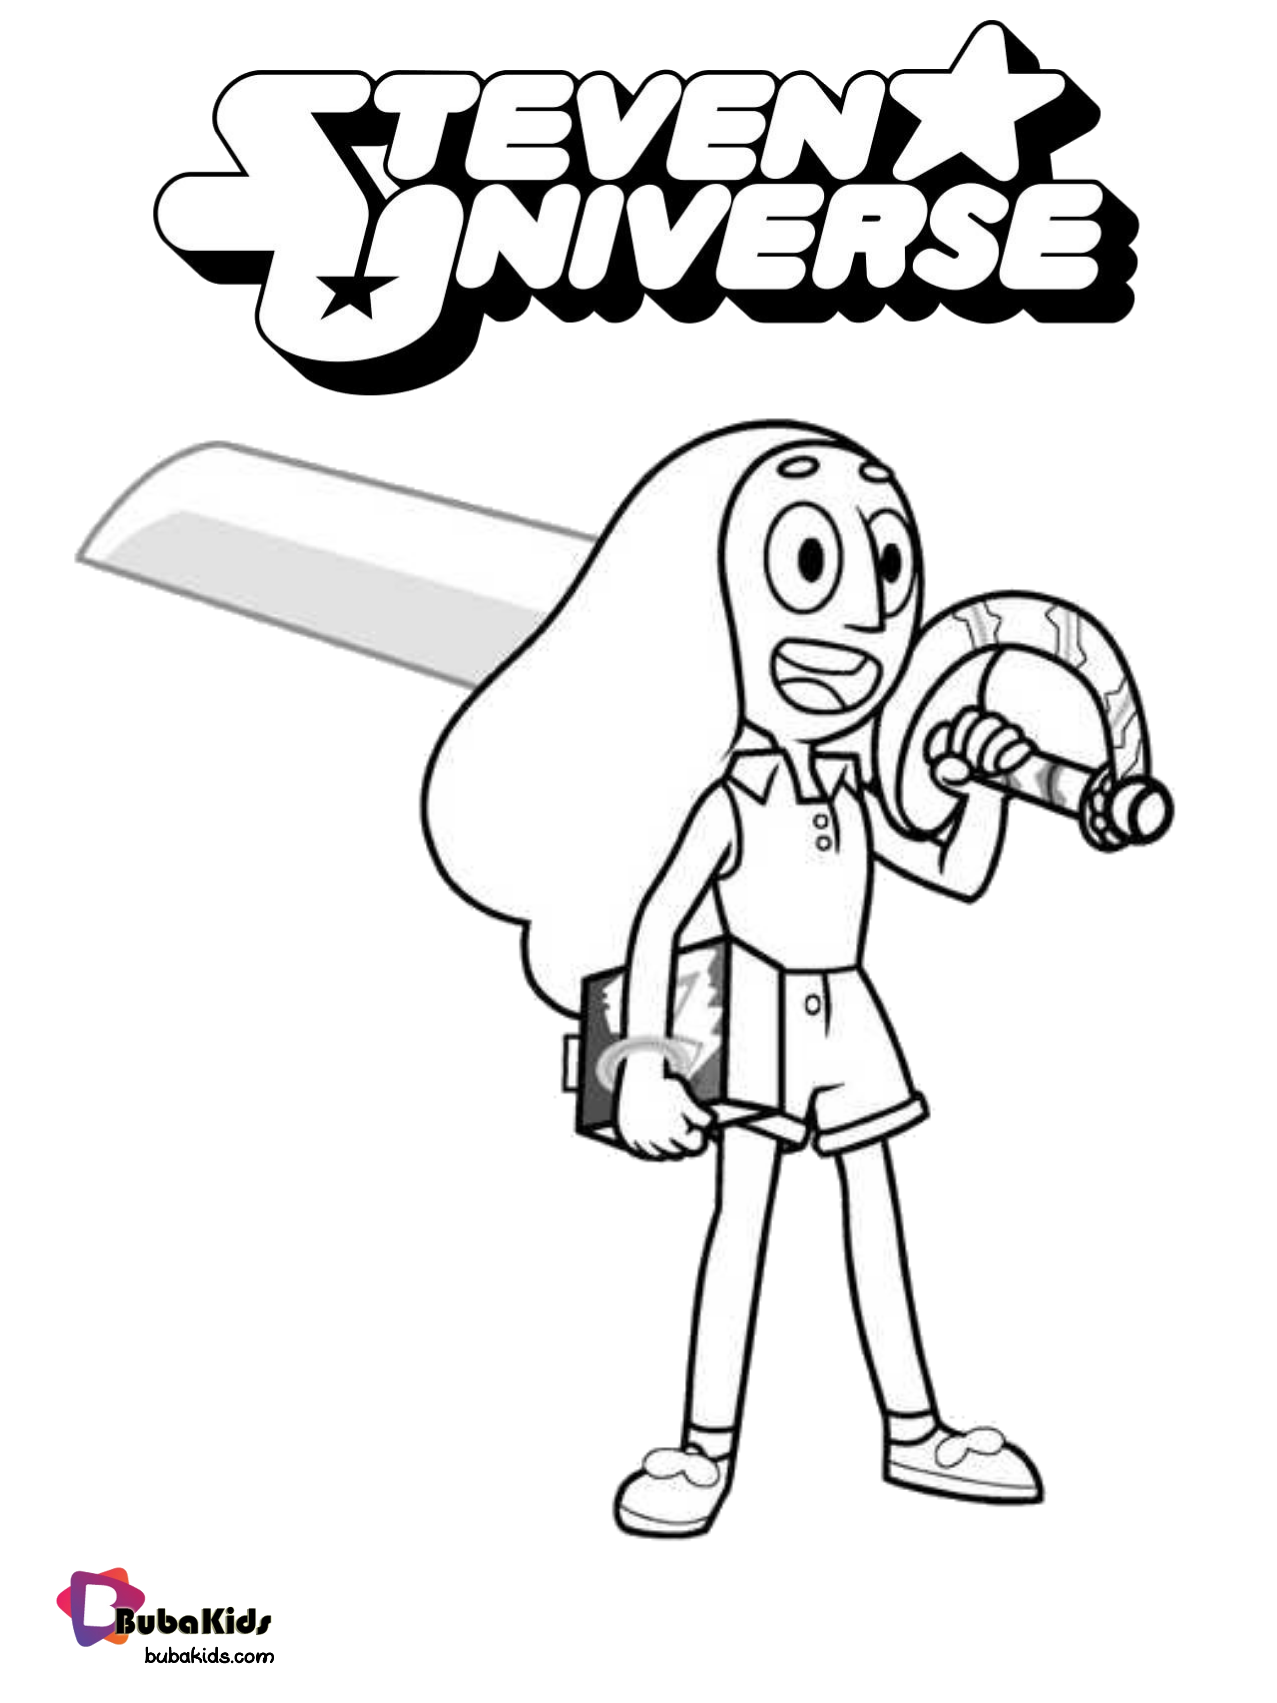 Connie Maheswara Steven Universe coloring page.